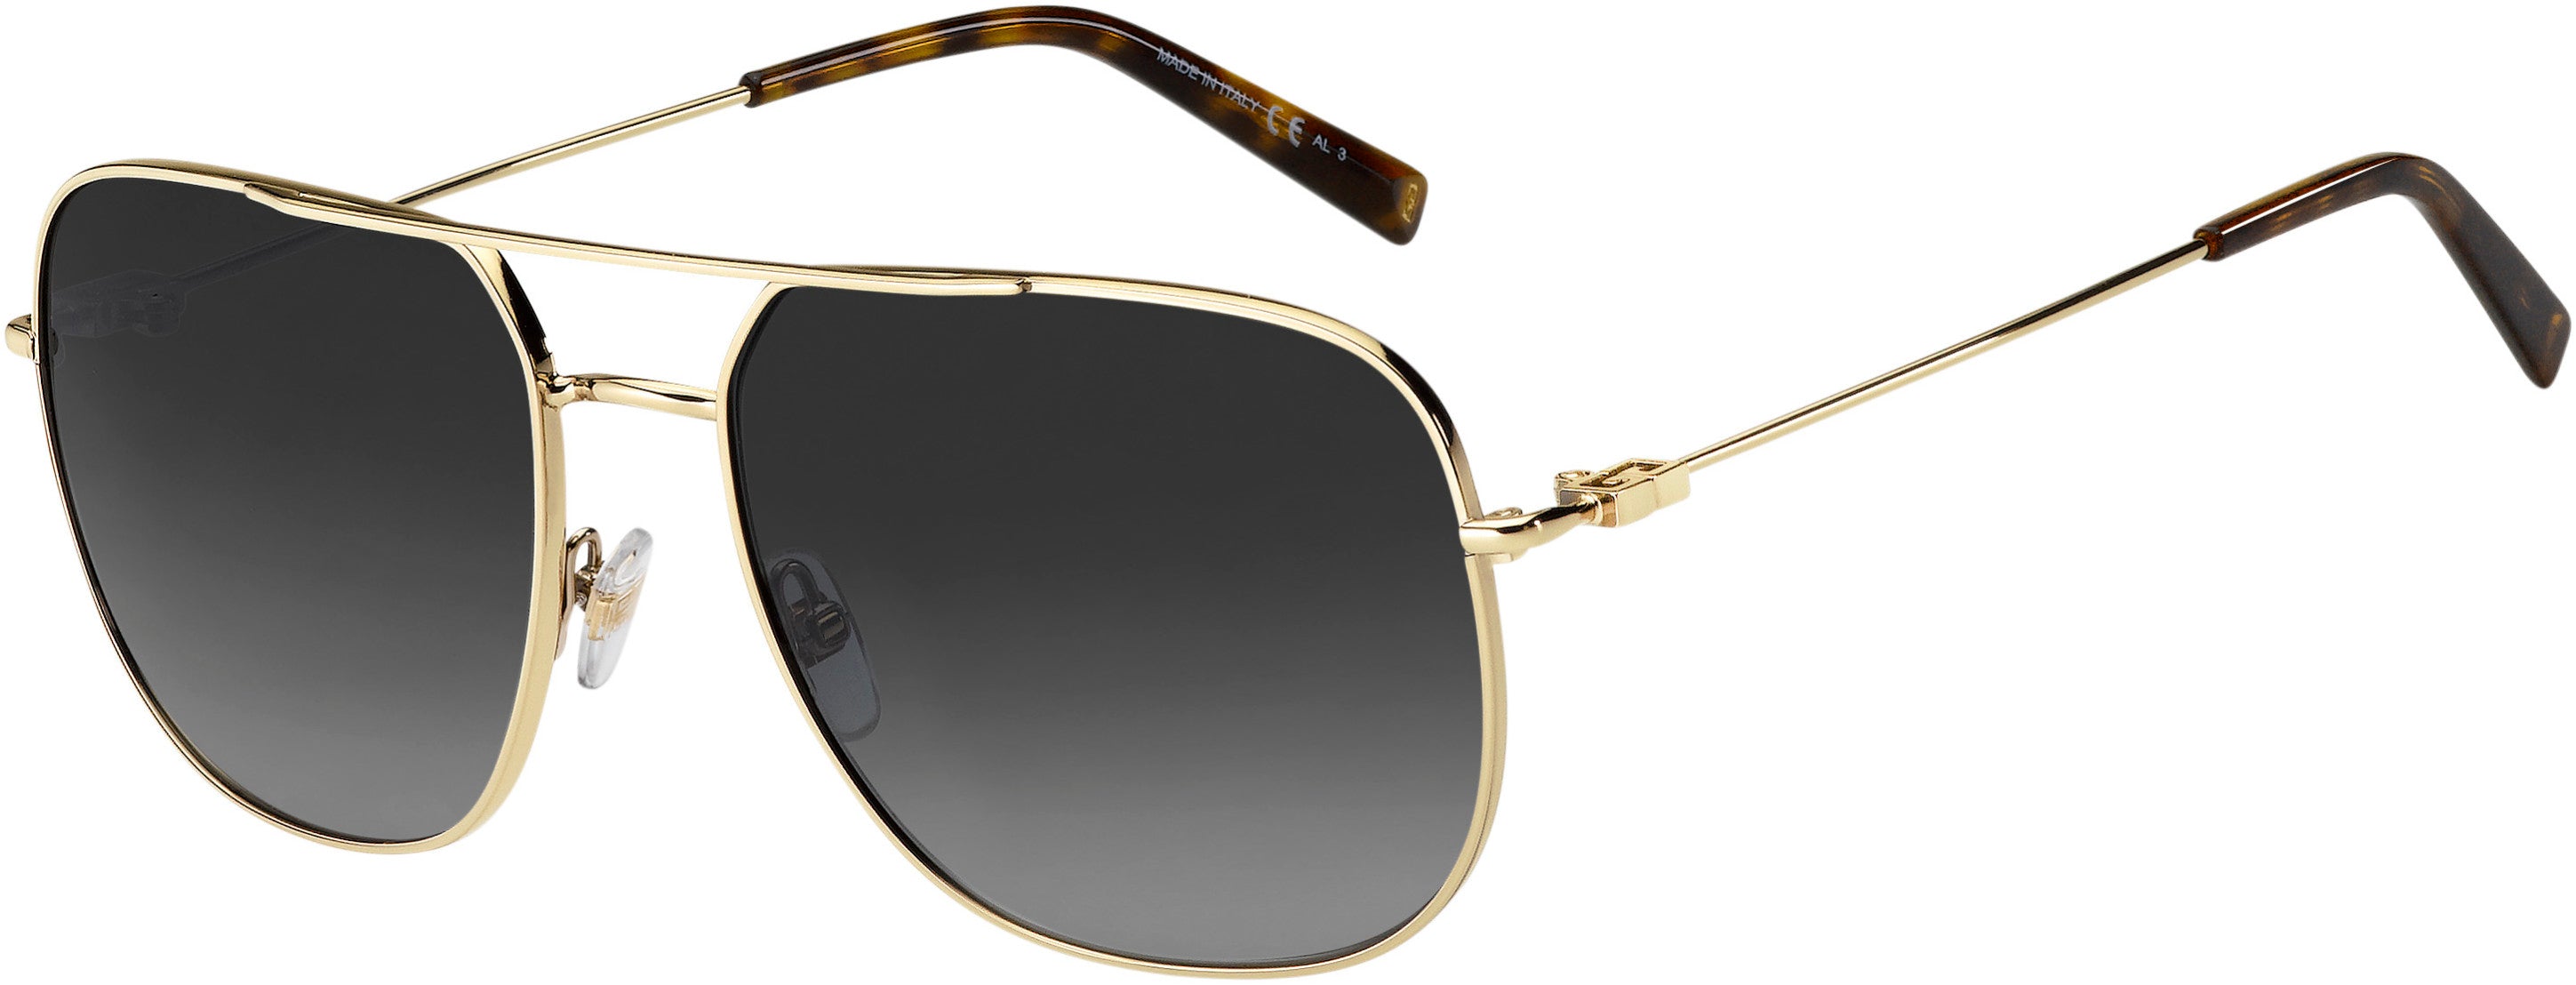  Givenchy 7195/S Aviator Sunglasses 0J5G-0J5G  Gold (9O Dark Gray Gradient)